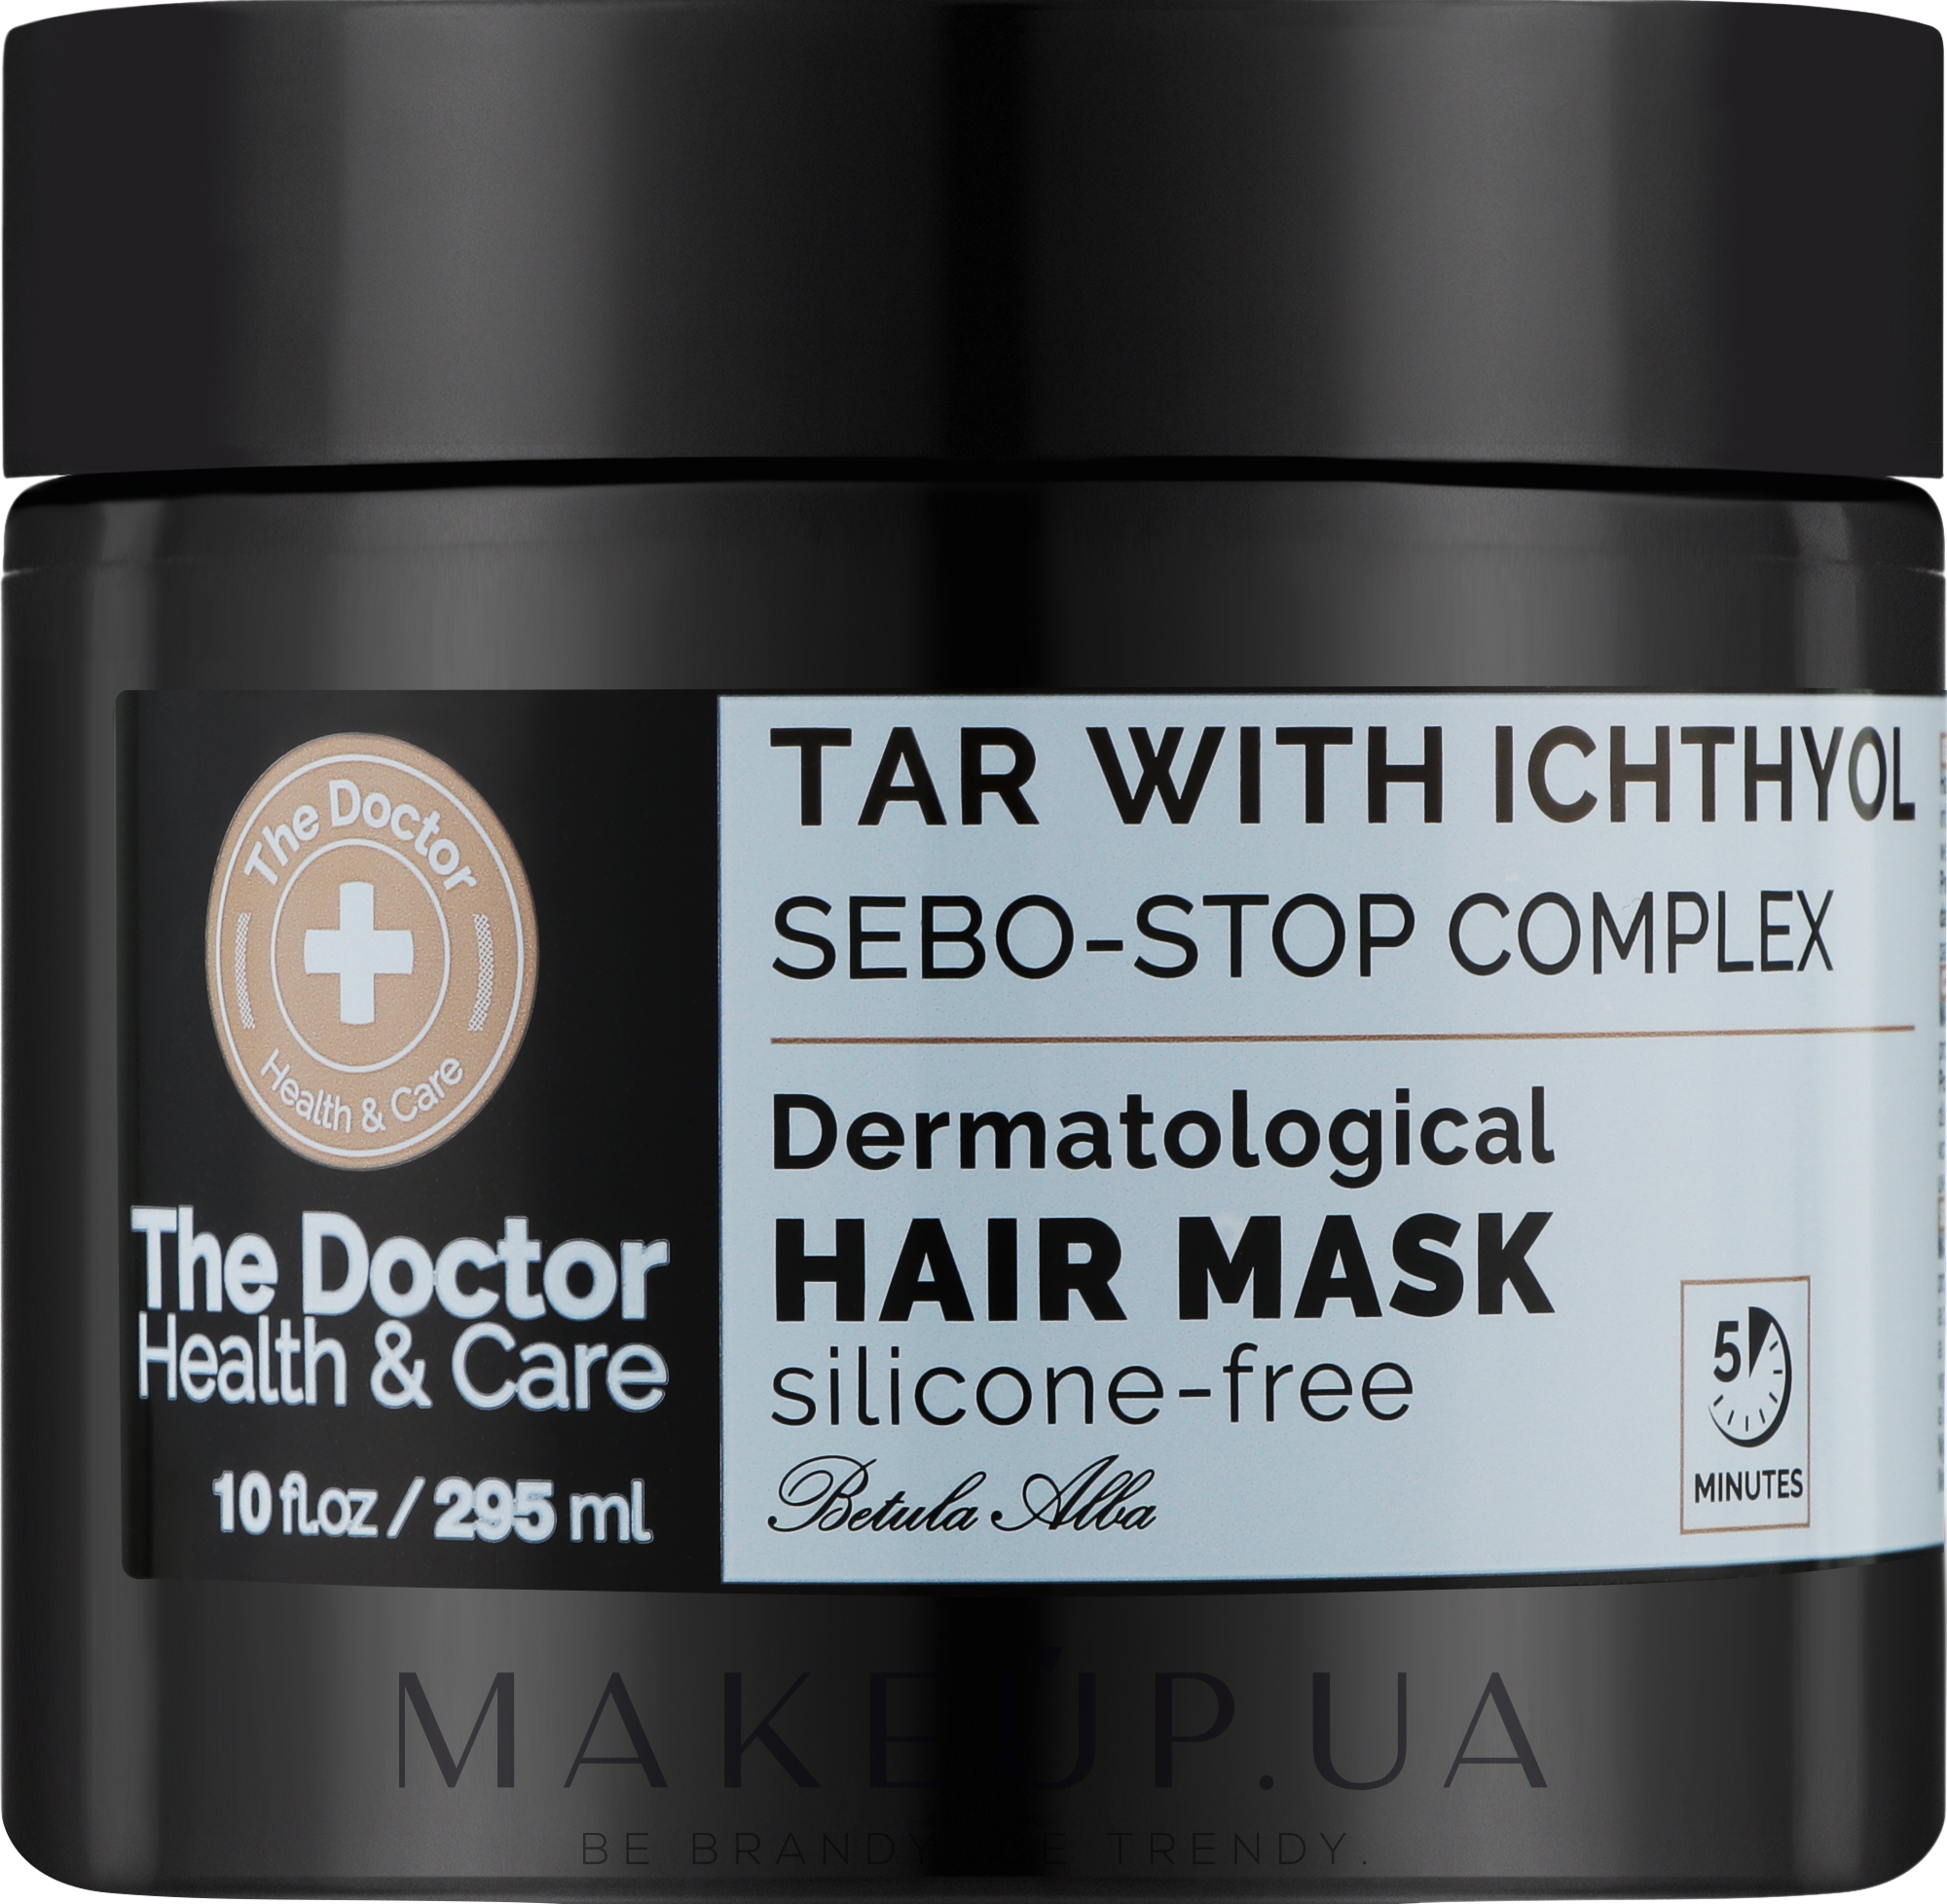 Маска для волос "Дегтярная с ихтиолом" - The Doctor Health & Care Tar With Ichthyol + Sebo-Stop Complex Hair Mask — фото 295ml